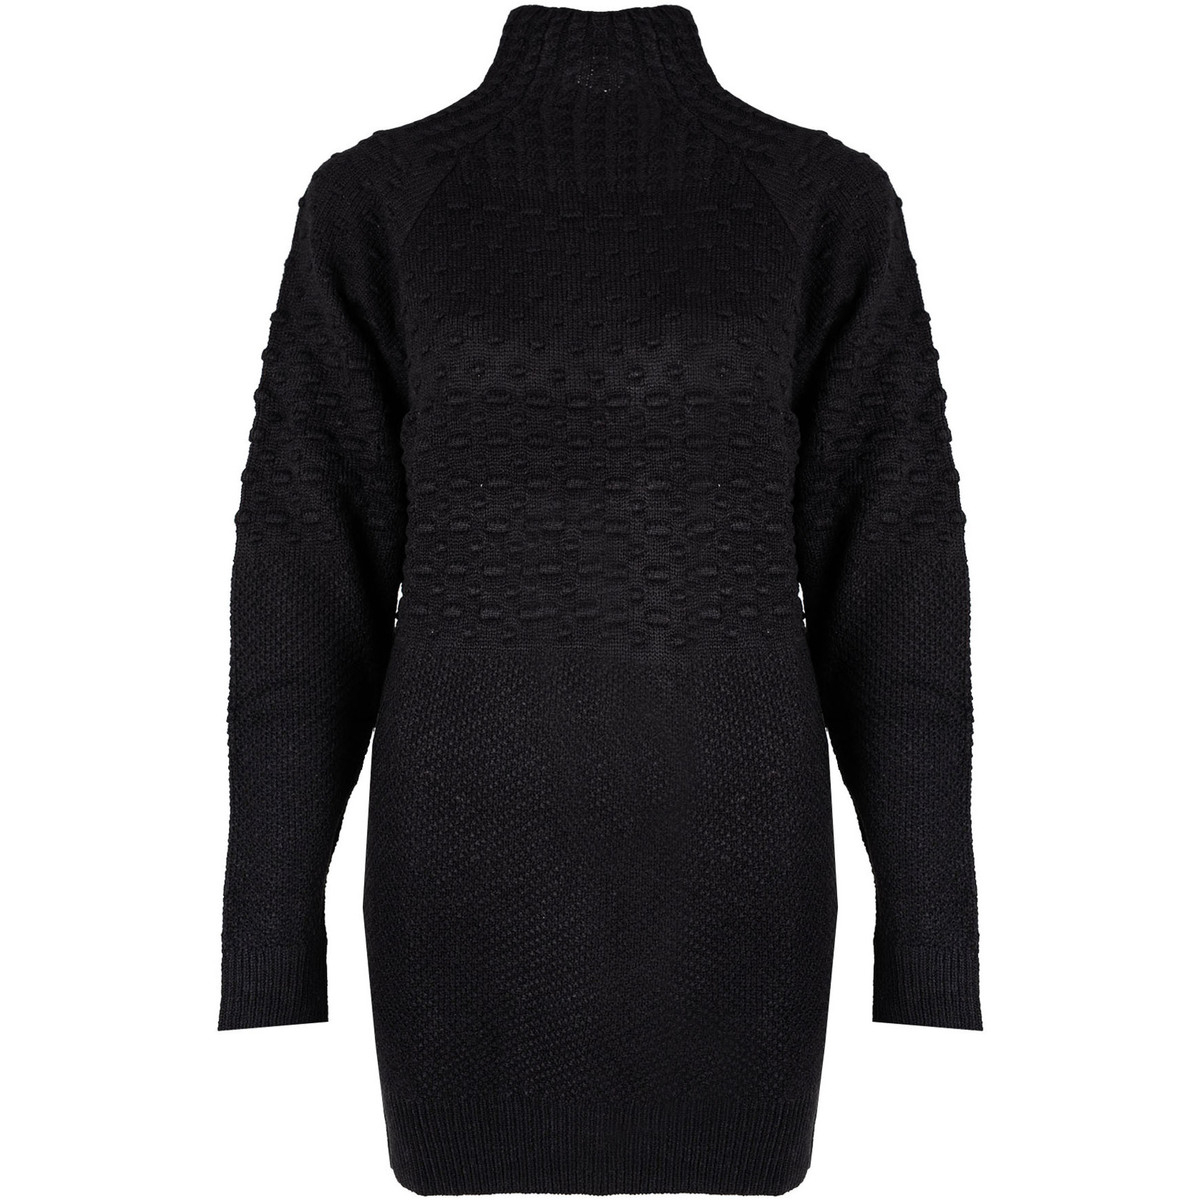 textil Mujer Vestidos cortos Silvian Heach PGA22113VE Negro